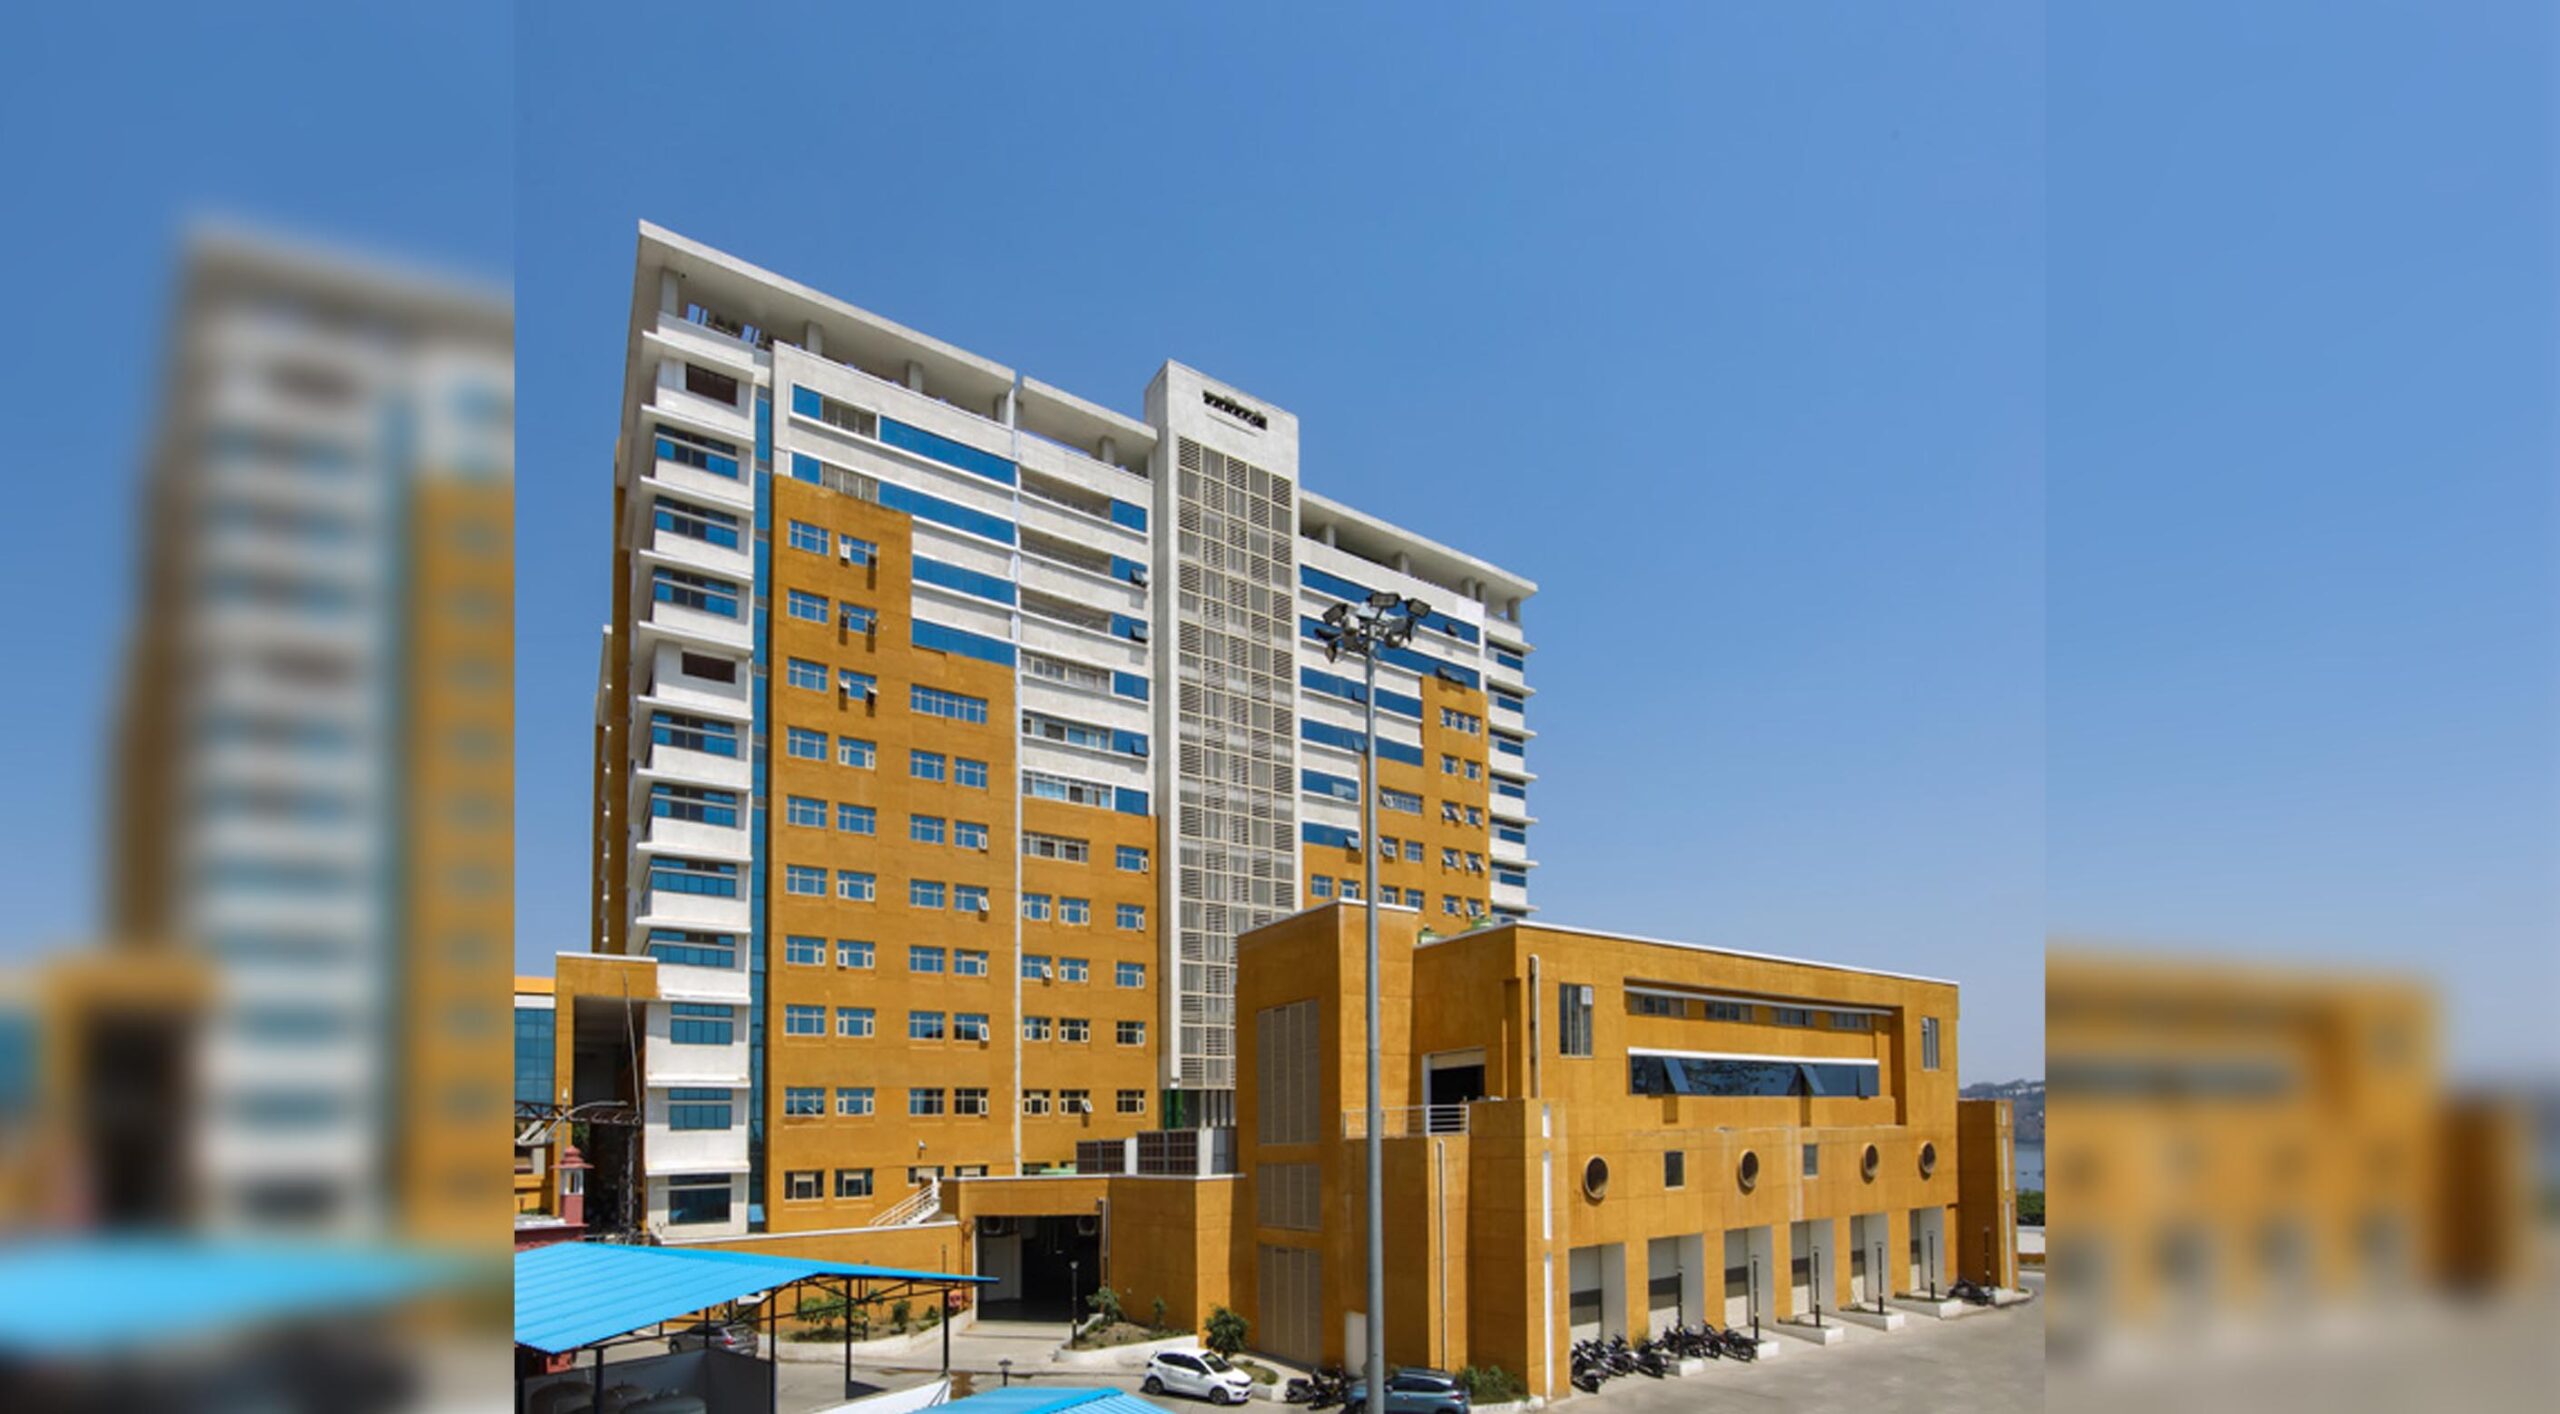 Hamidia hospital transforms into a smart Medi-City